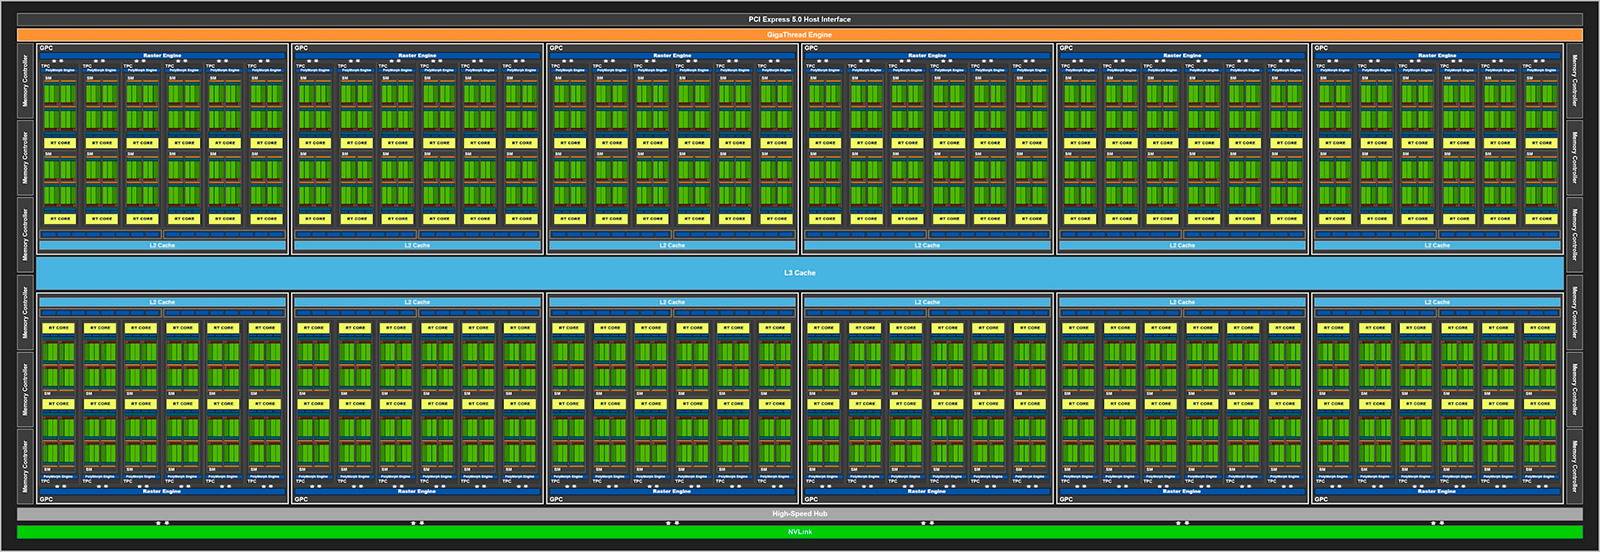 Видеокарты NVIDIA Ada Lovelace (GeForce RTX 4000) могут получить аналог AMD Infinity Cache